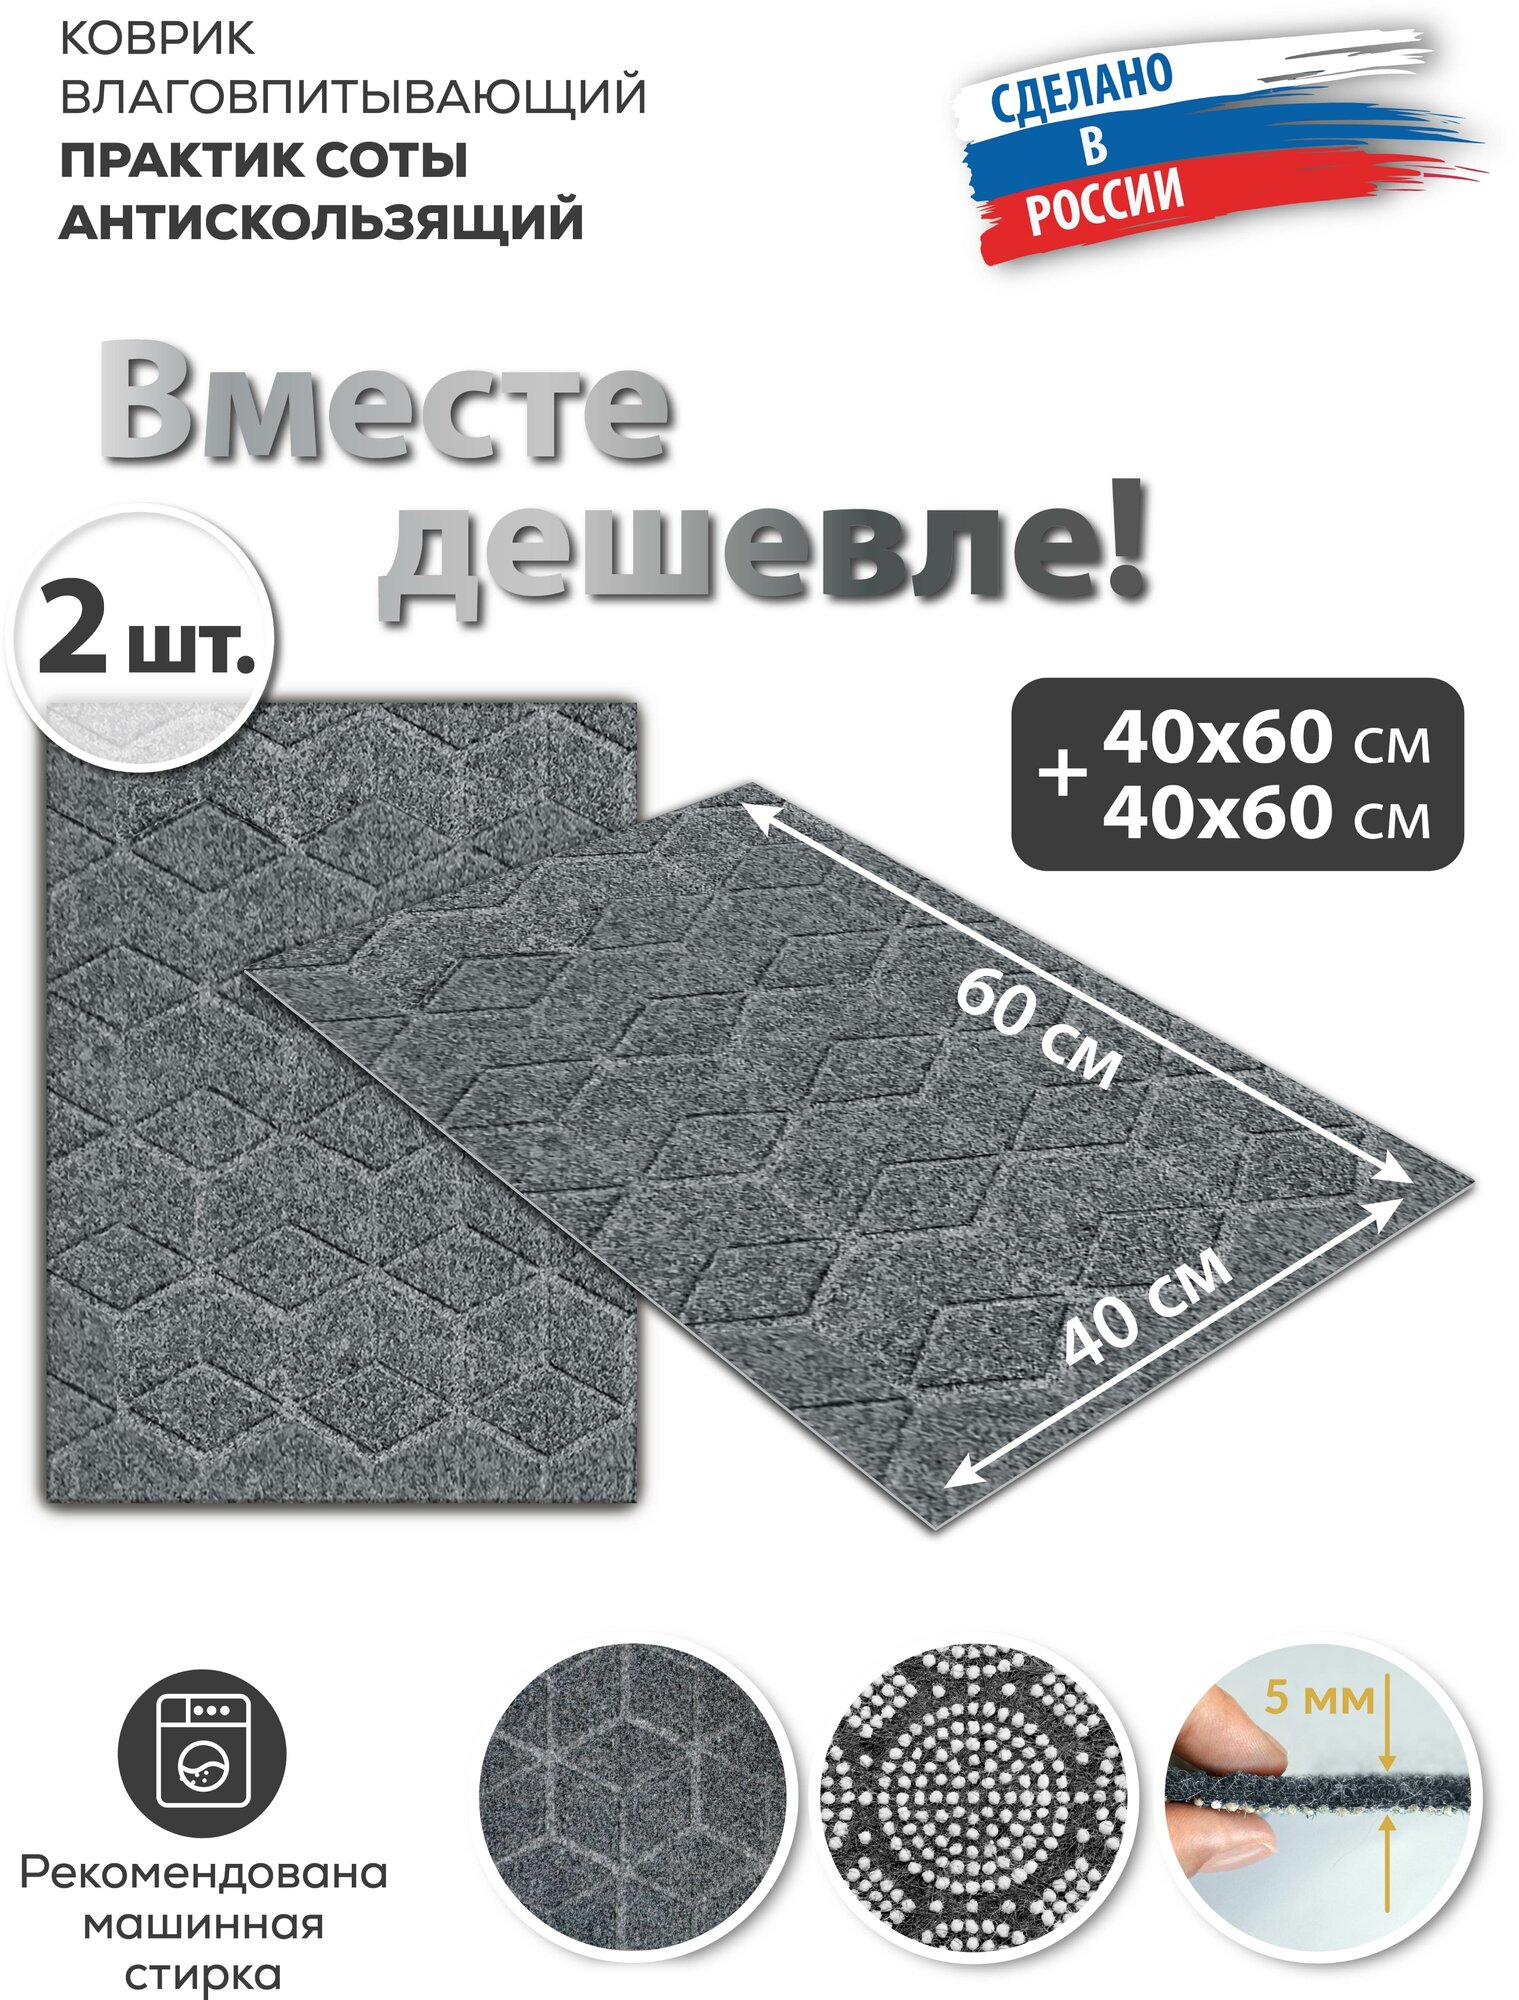 Набор придверный ковриков SHAHINTEX практик Соты 40х60+40х60 серый - фотография № 1